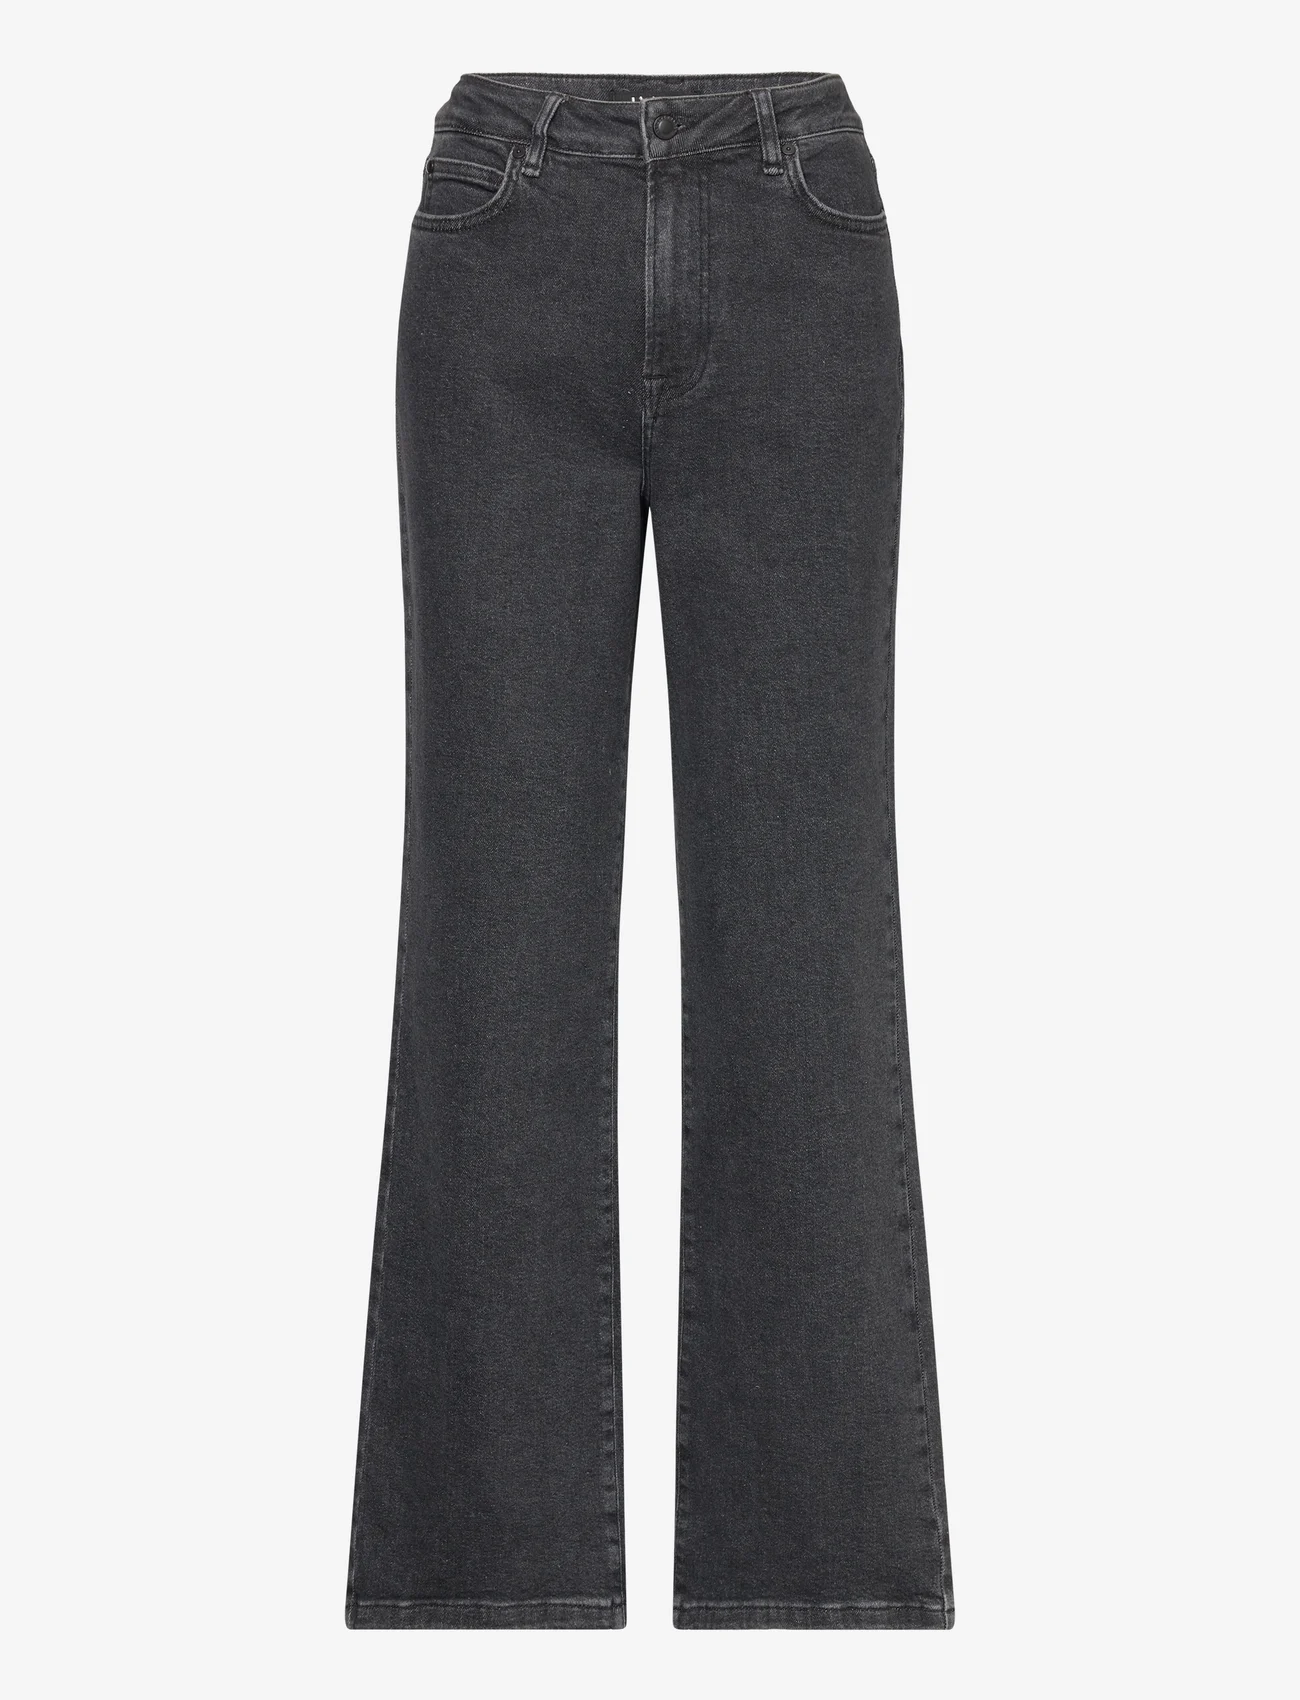 IVY Copenhagen - IVY-Mia Jeans Wash Vintage Black - tiesaus kirpimo džinsai - black - 0